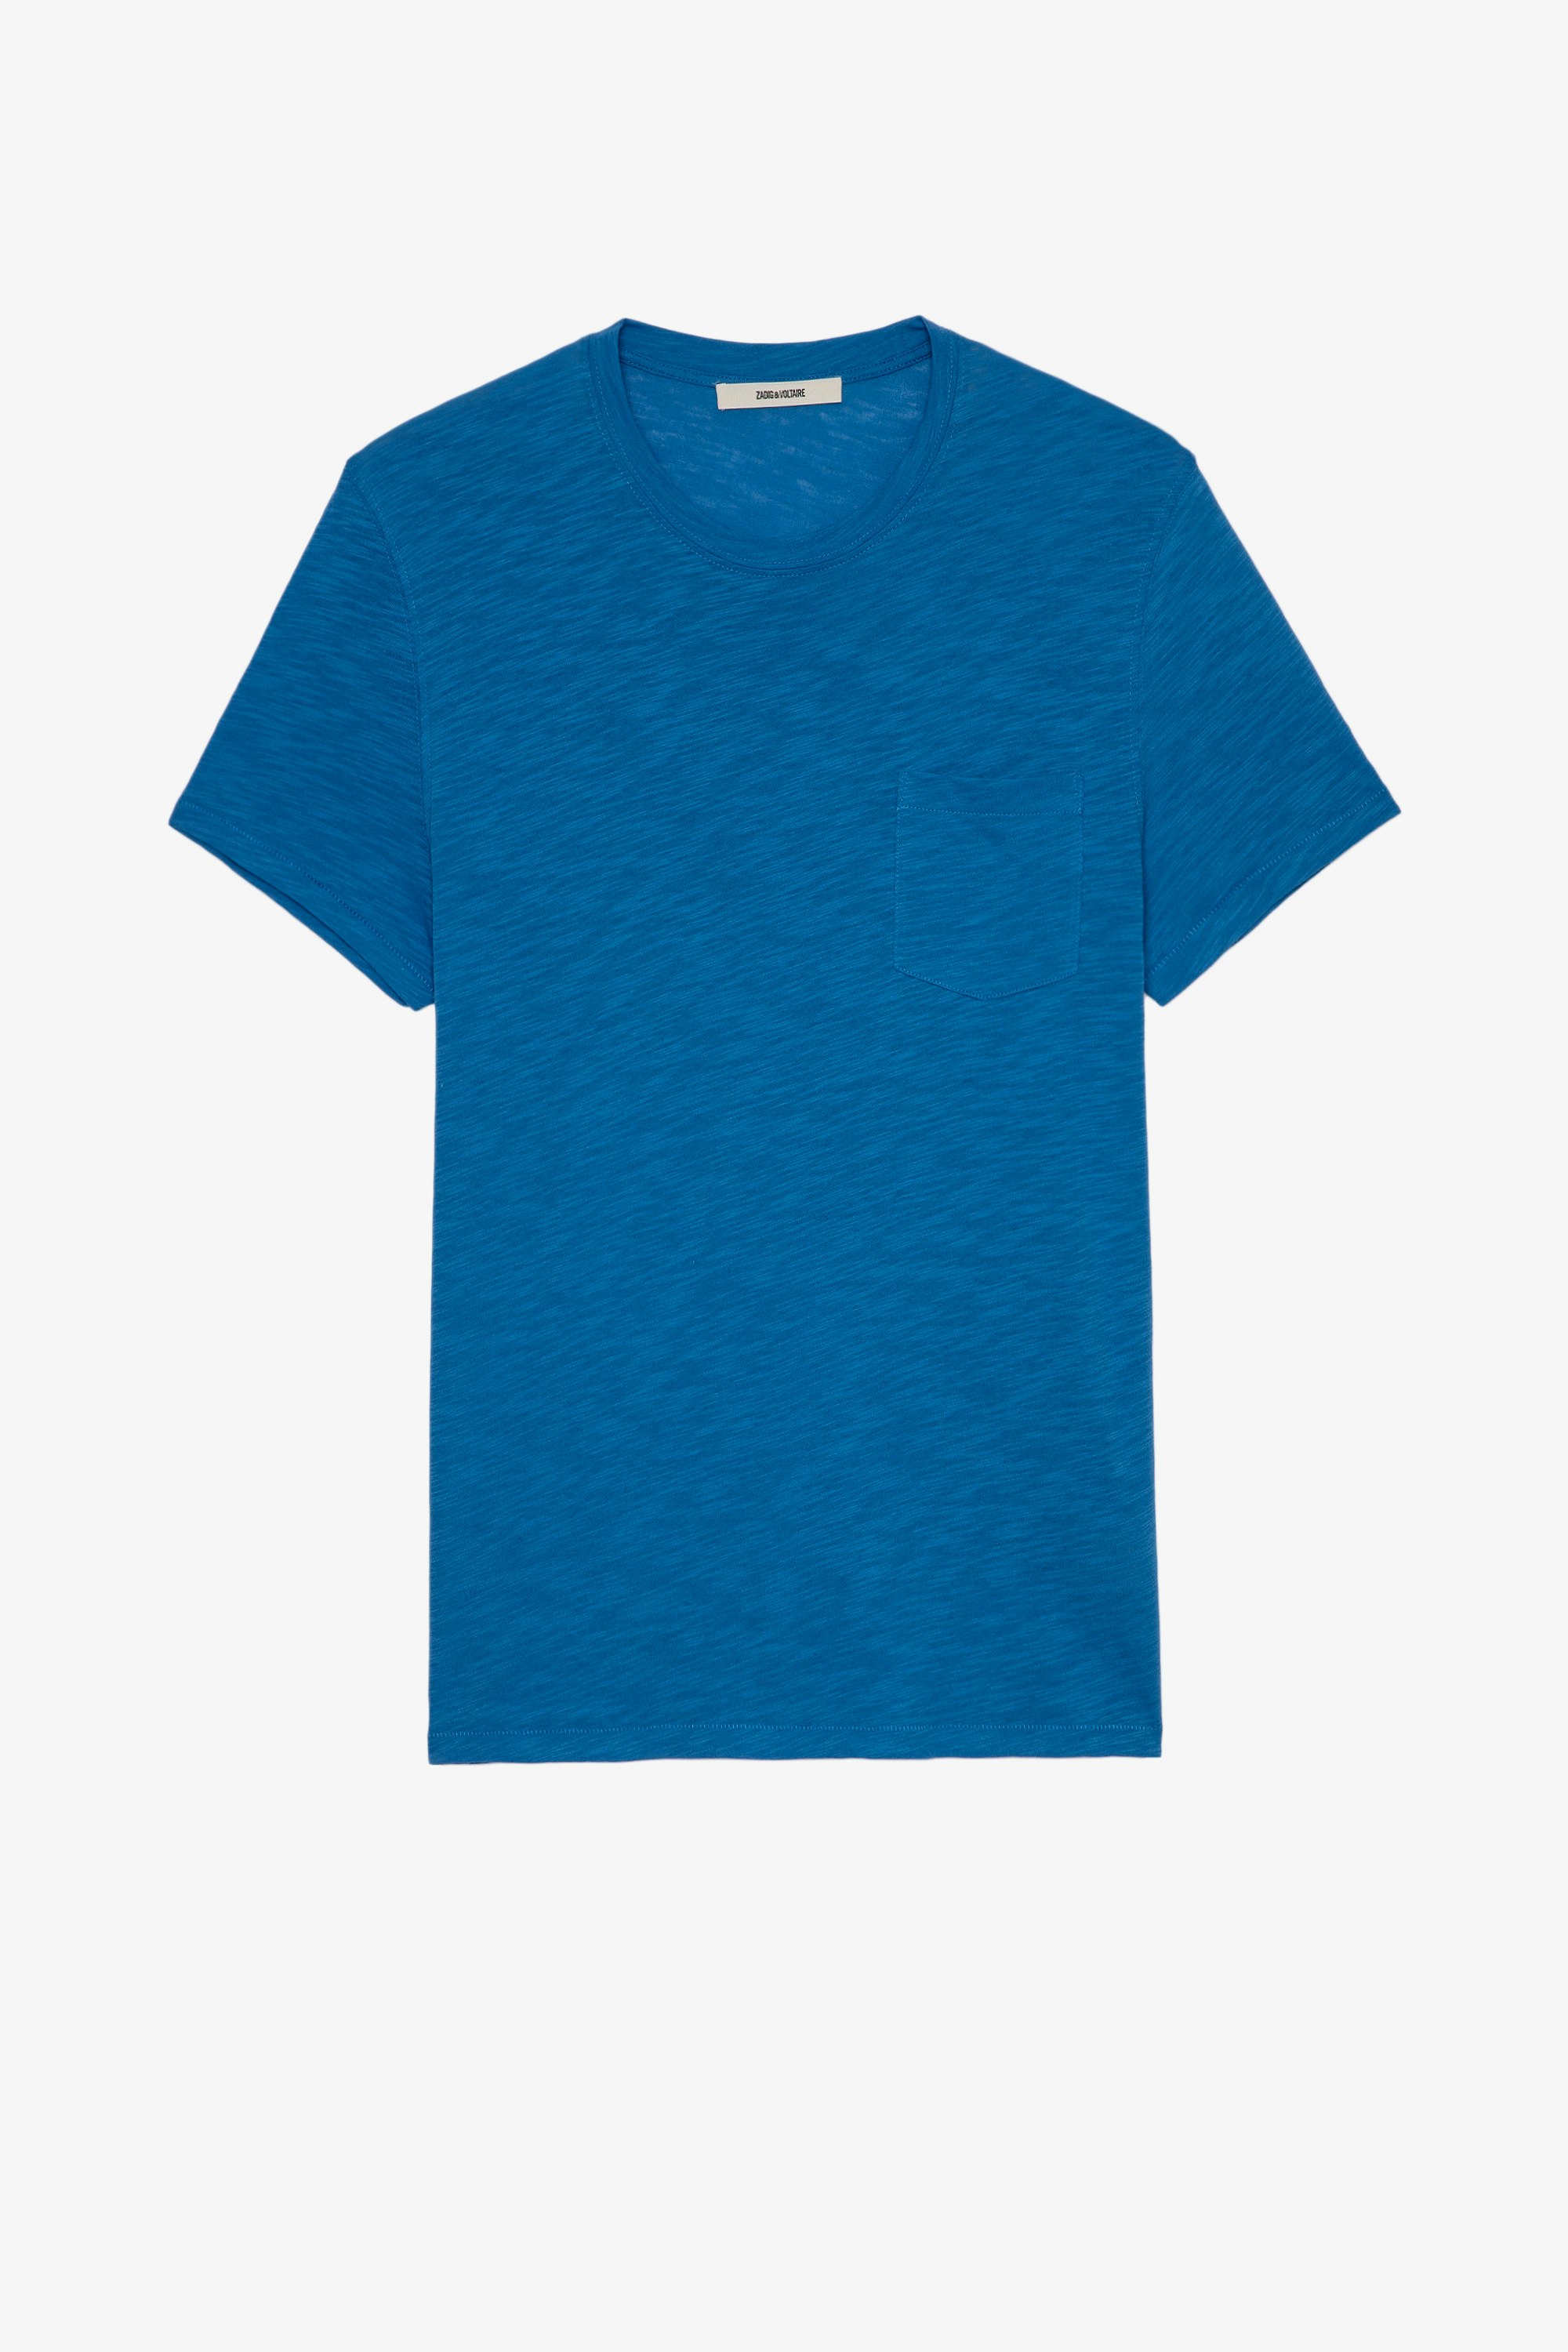 Stockholm Flamme T-Shirt Men's blue cotton t-shirt with skull print